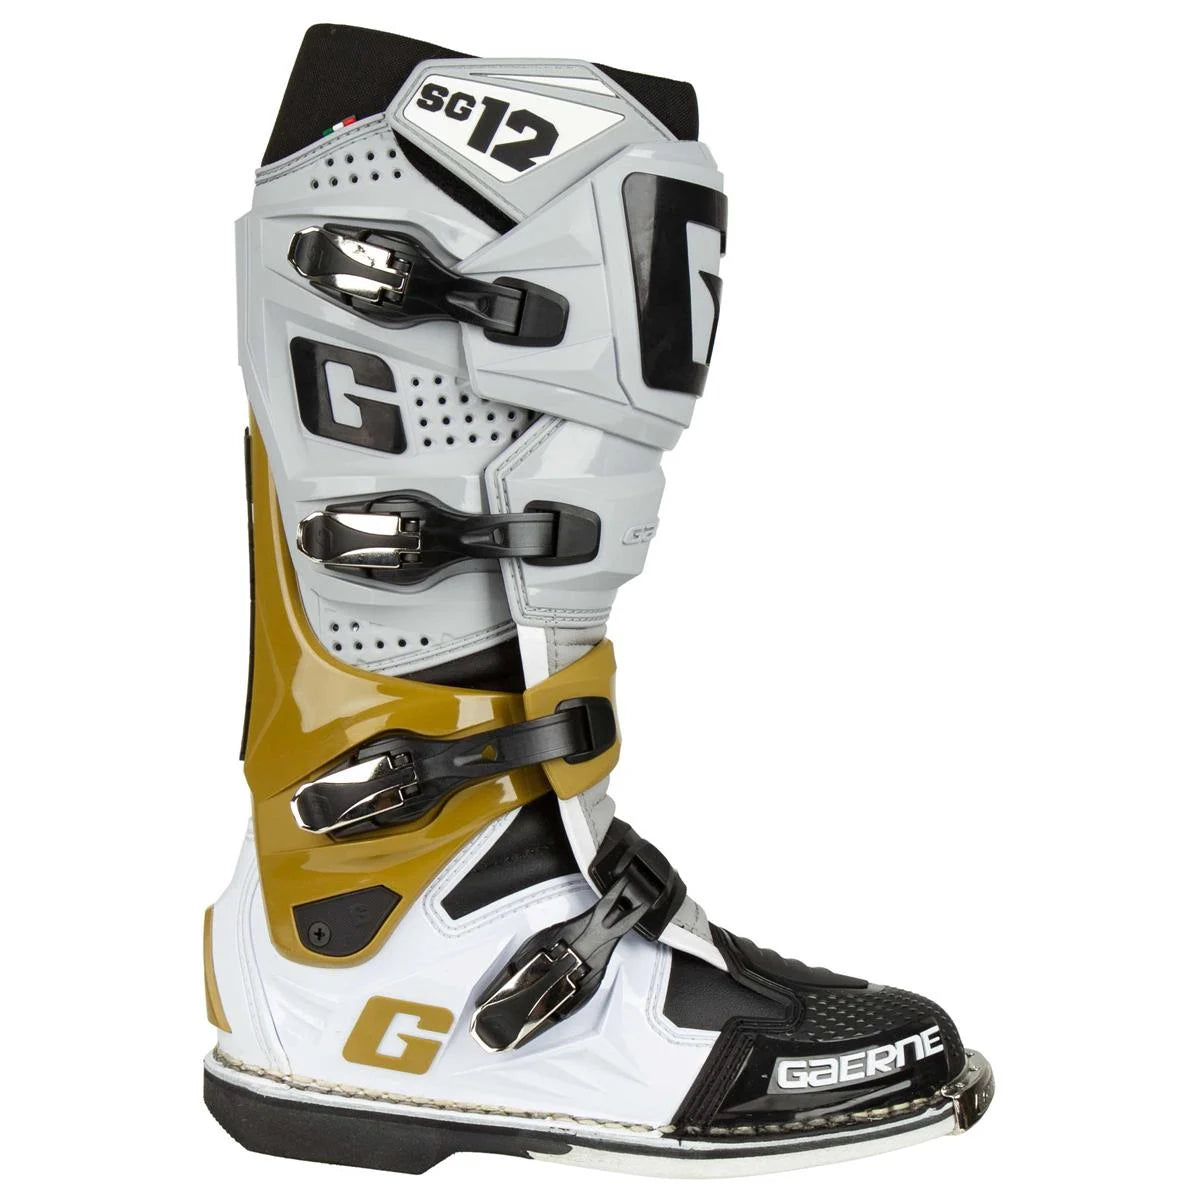 Gaerne SG12 Boots (Grey/Magnesium/White)